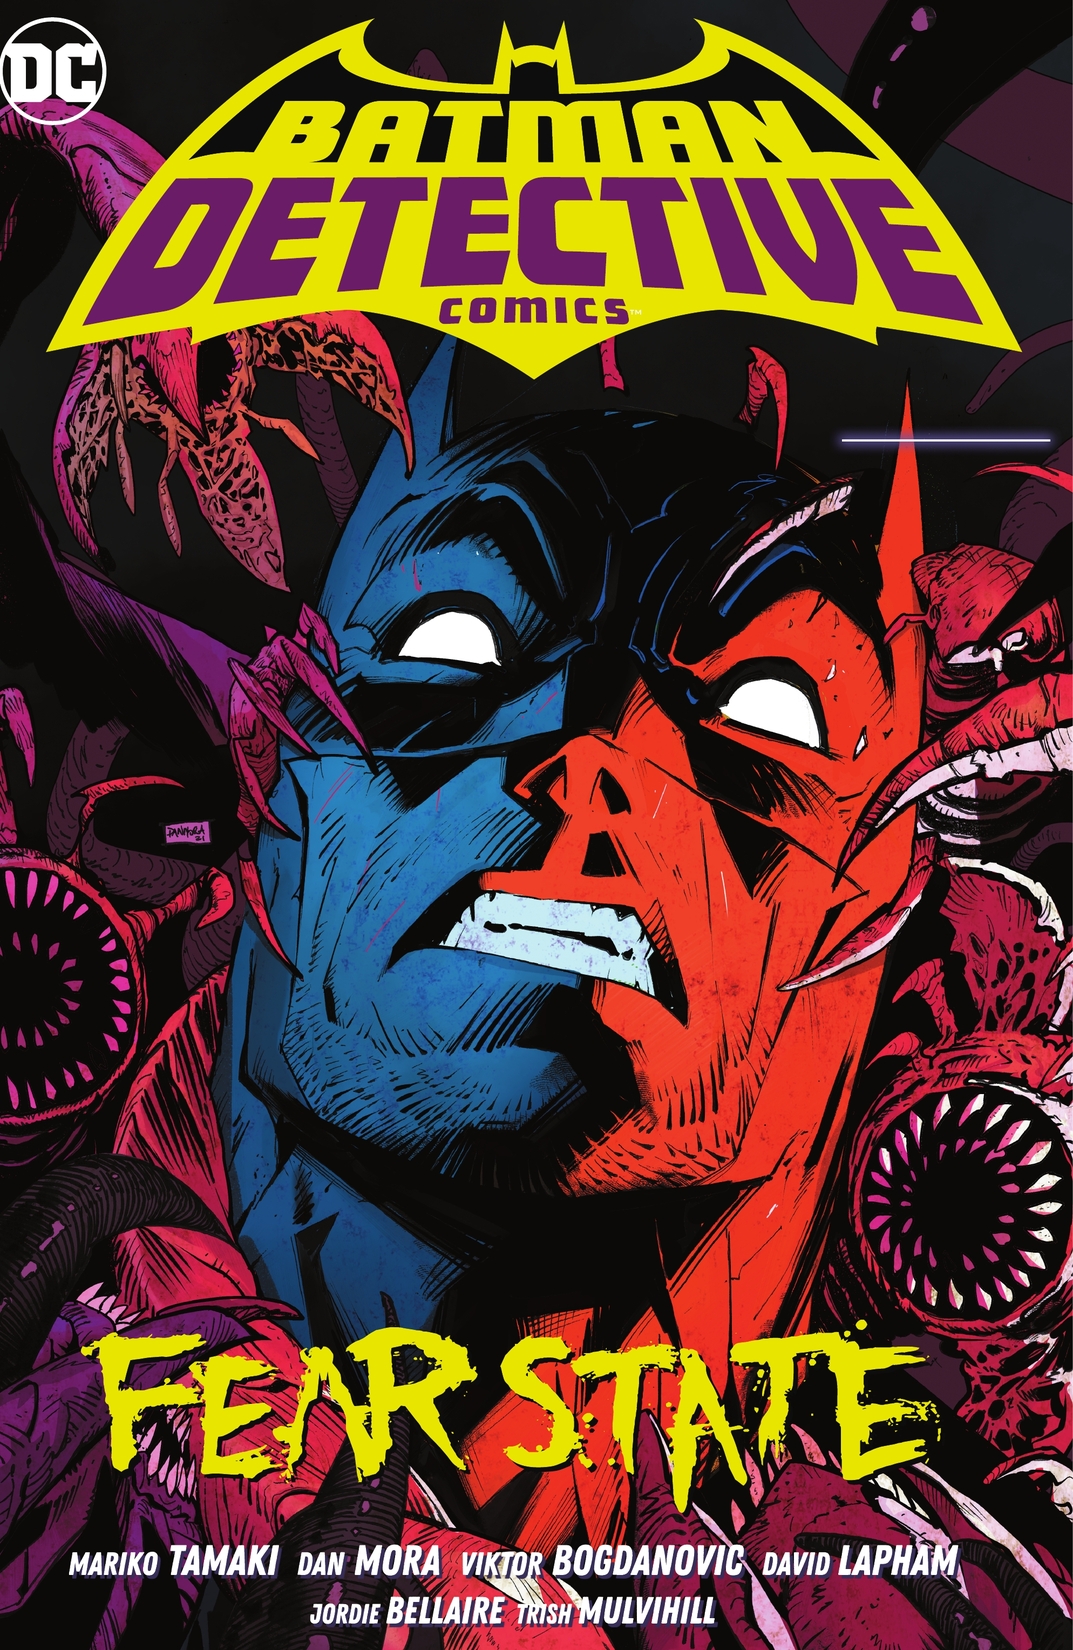 Batman: Detective Comics Vol. 2: Fear State - #0001 preview images